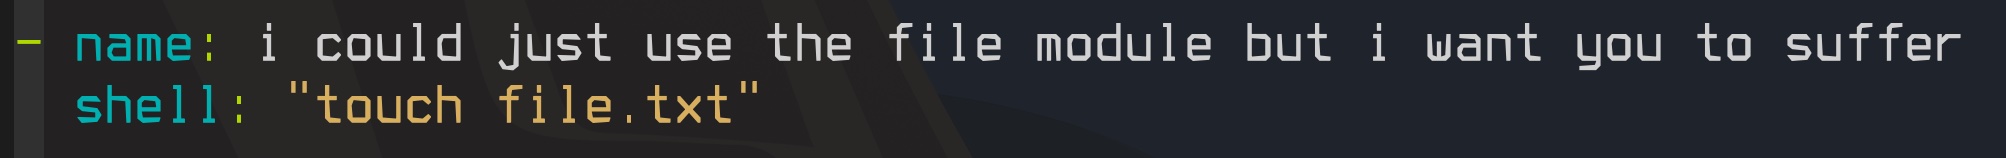 Pointless shell module usage